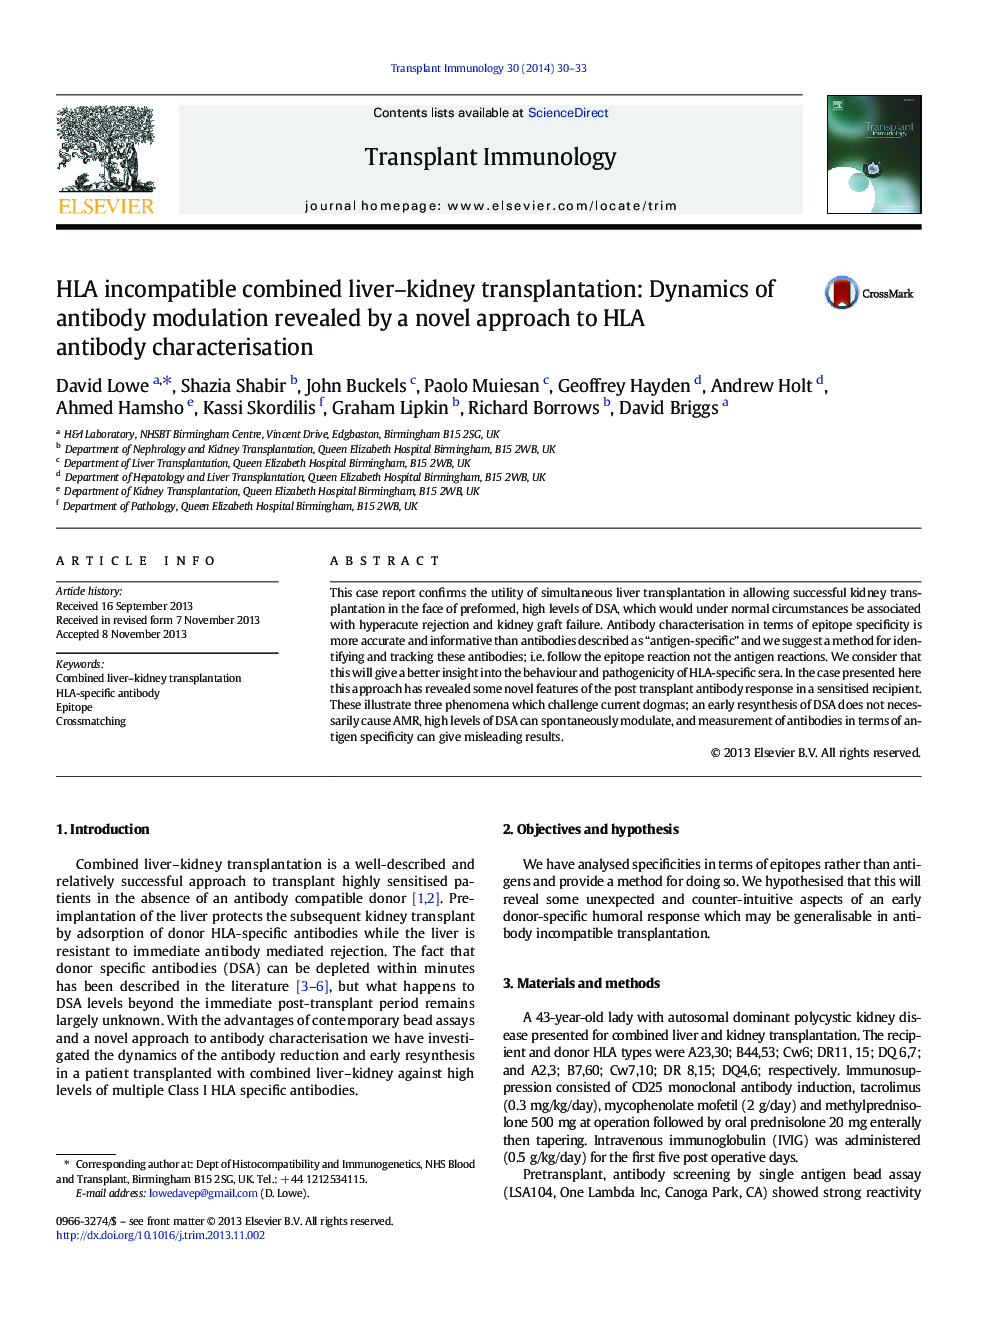 HLA incompatible combined liver-kidney transplantation: Dynamics of antibody modulation revealed by a novel approach to HLA antibody characterisation